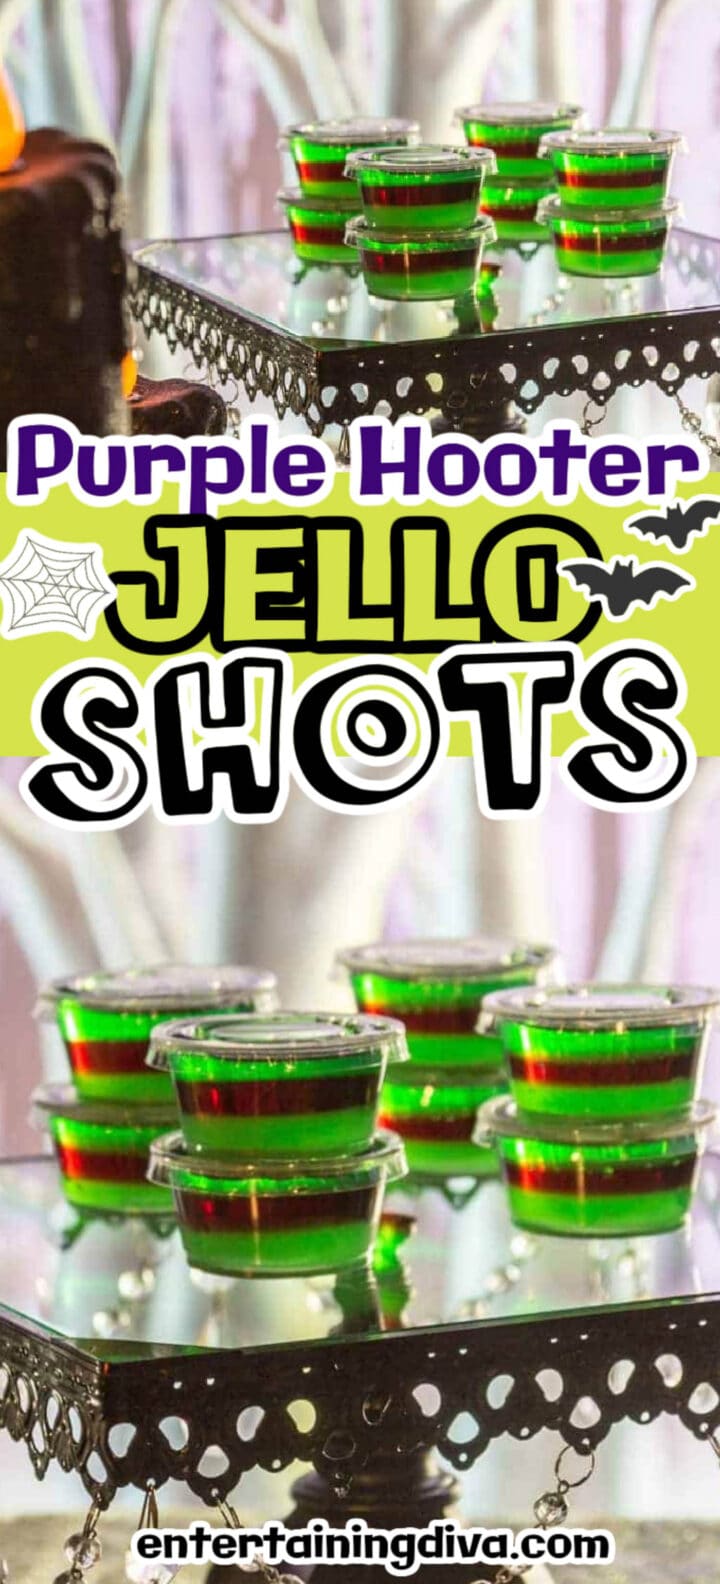 Purple Hooter layered jello shots on a table.